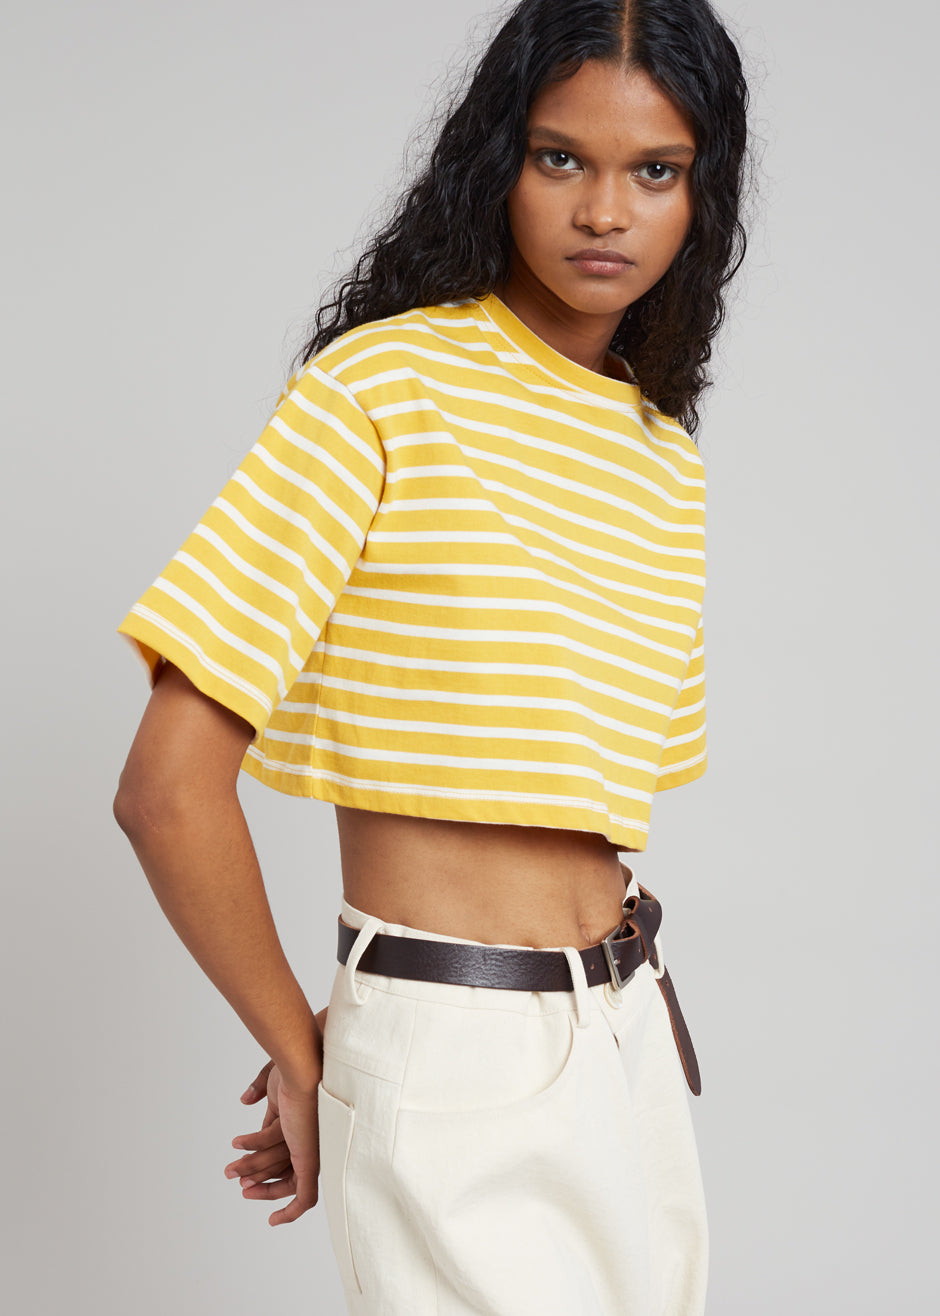 Karina Cropped T-Shirt - Yellow Gold/Off White - 3